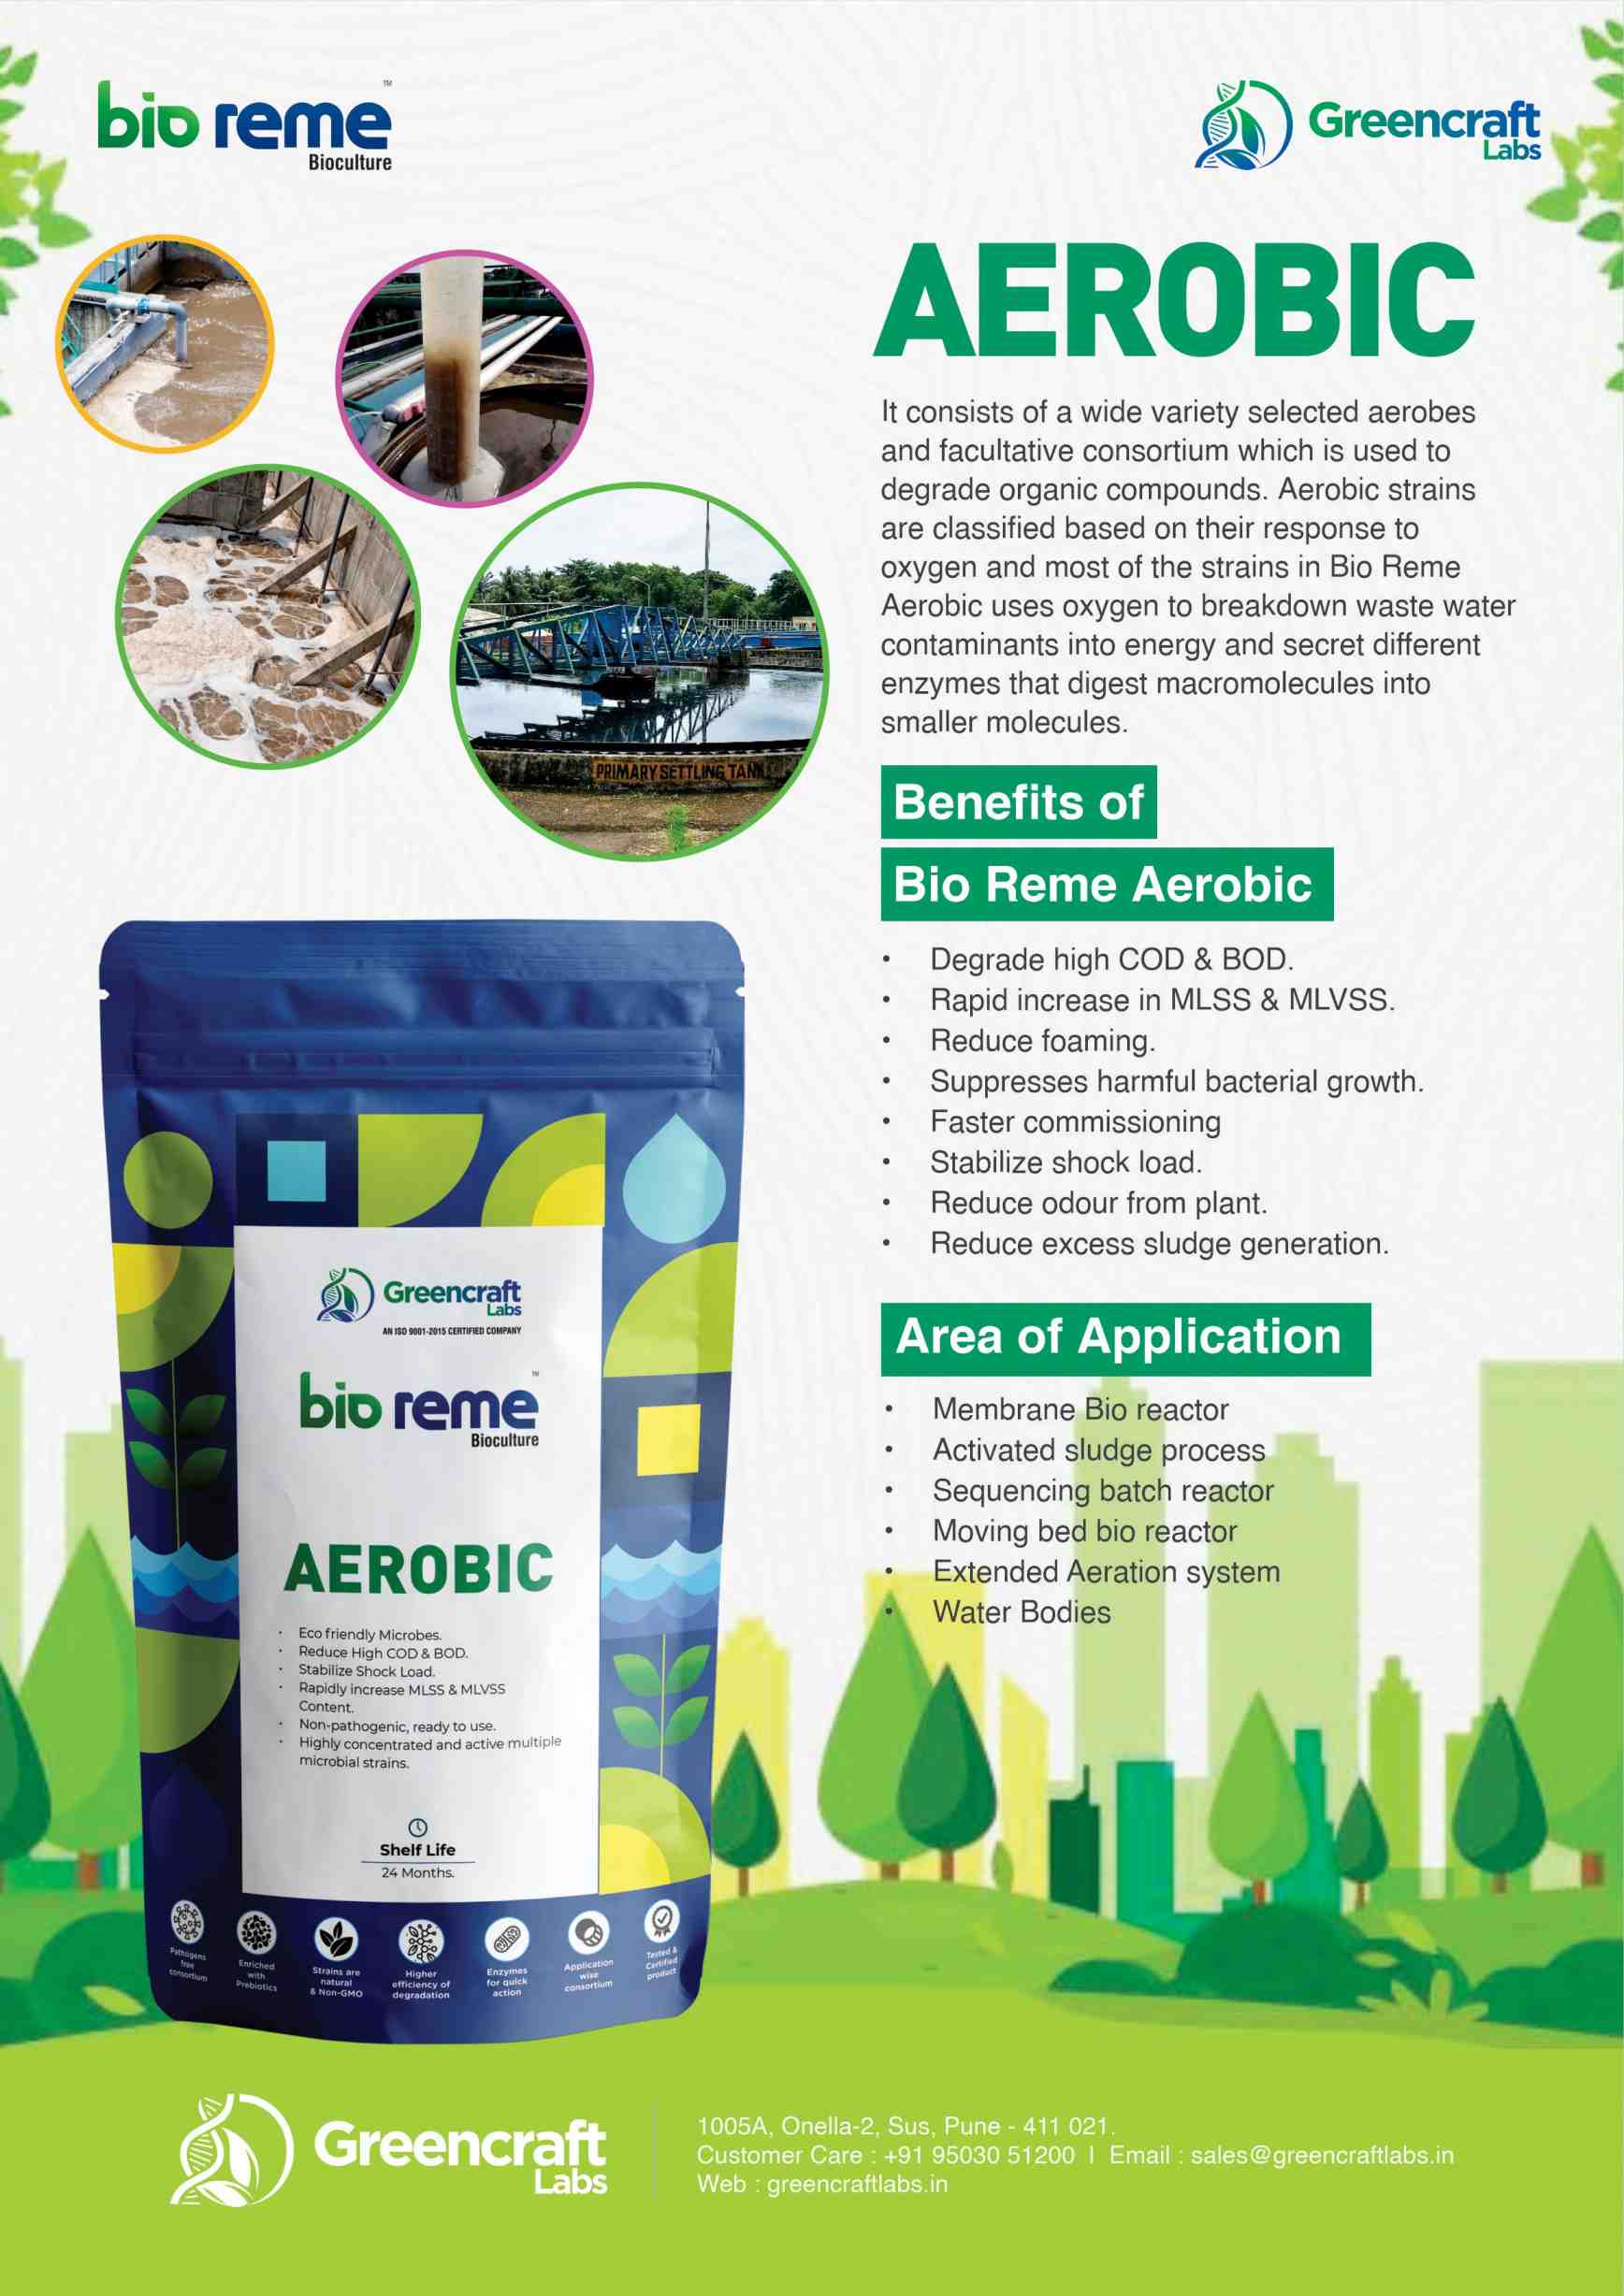 bio-reme-aerobic-bacteria-bioculture